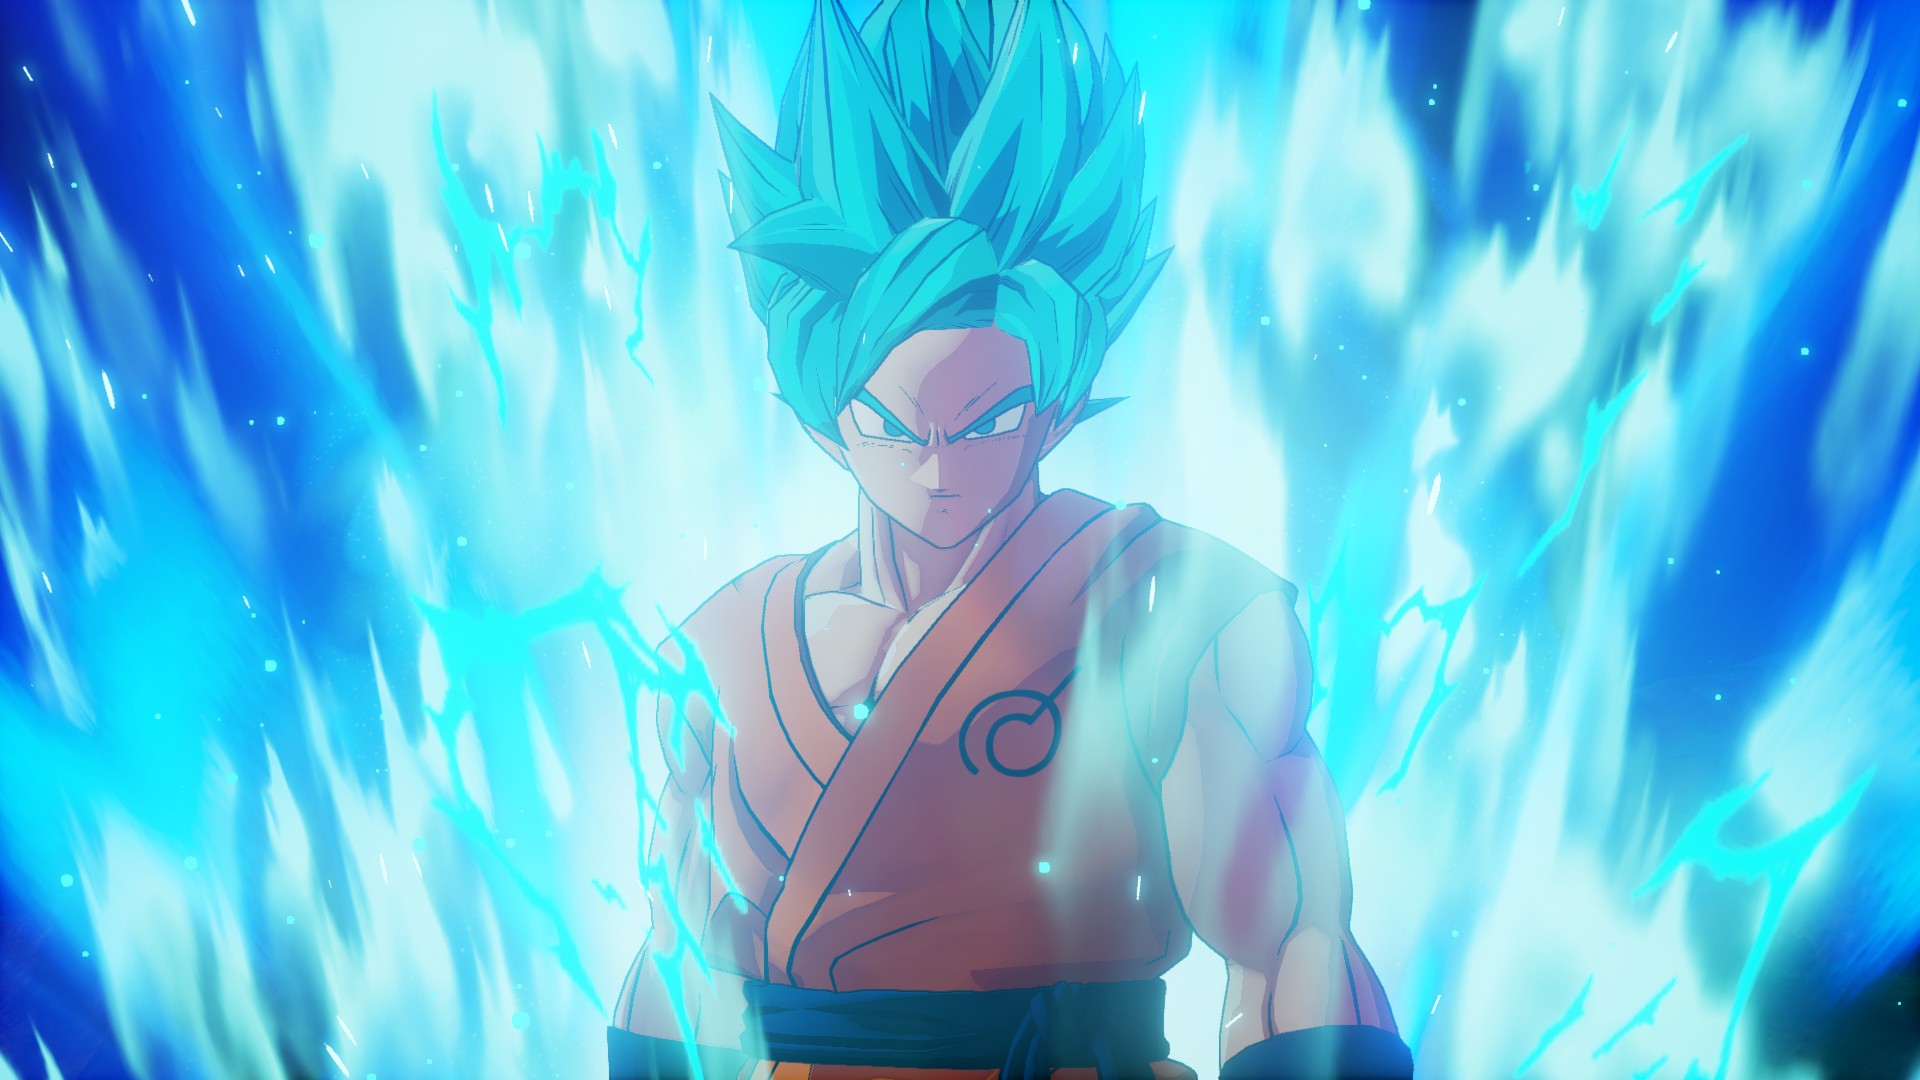 Dragon Ball Z: Kakarot DLC 2 Will Add Super Saiyan Blue Goku & Vegeta